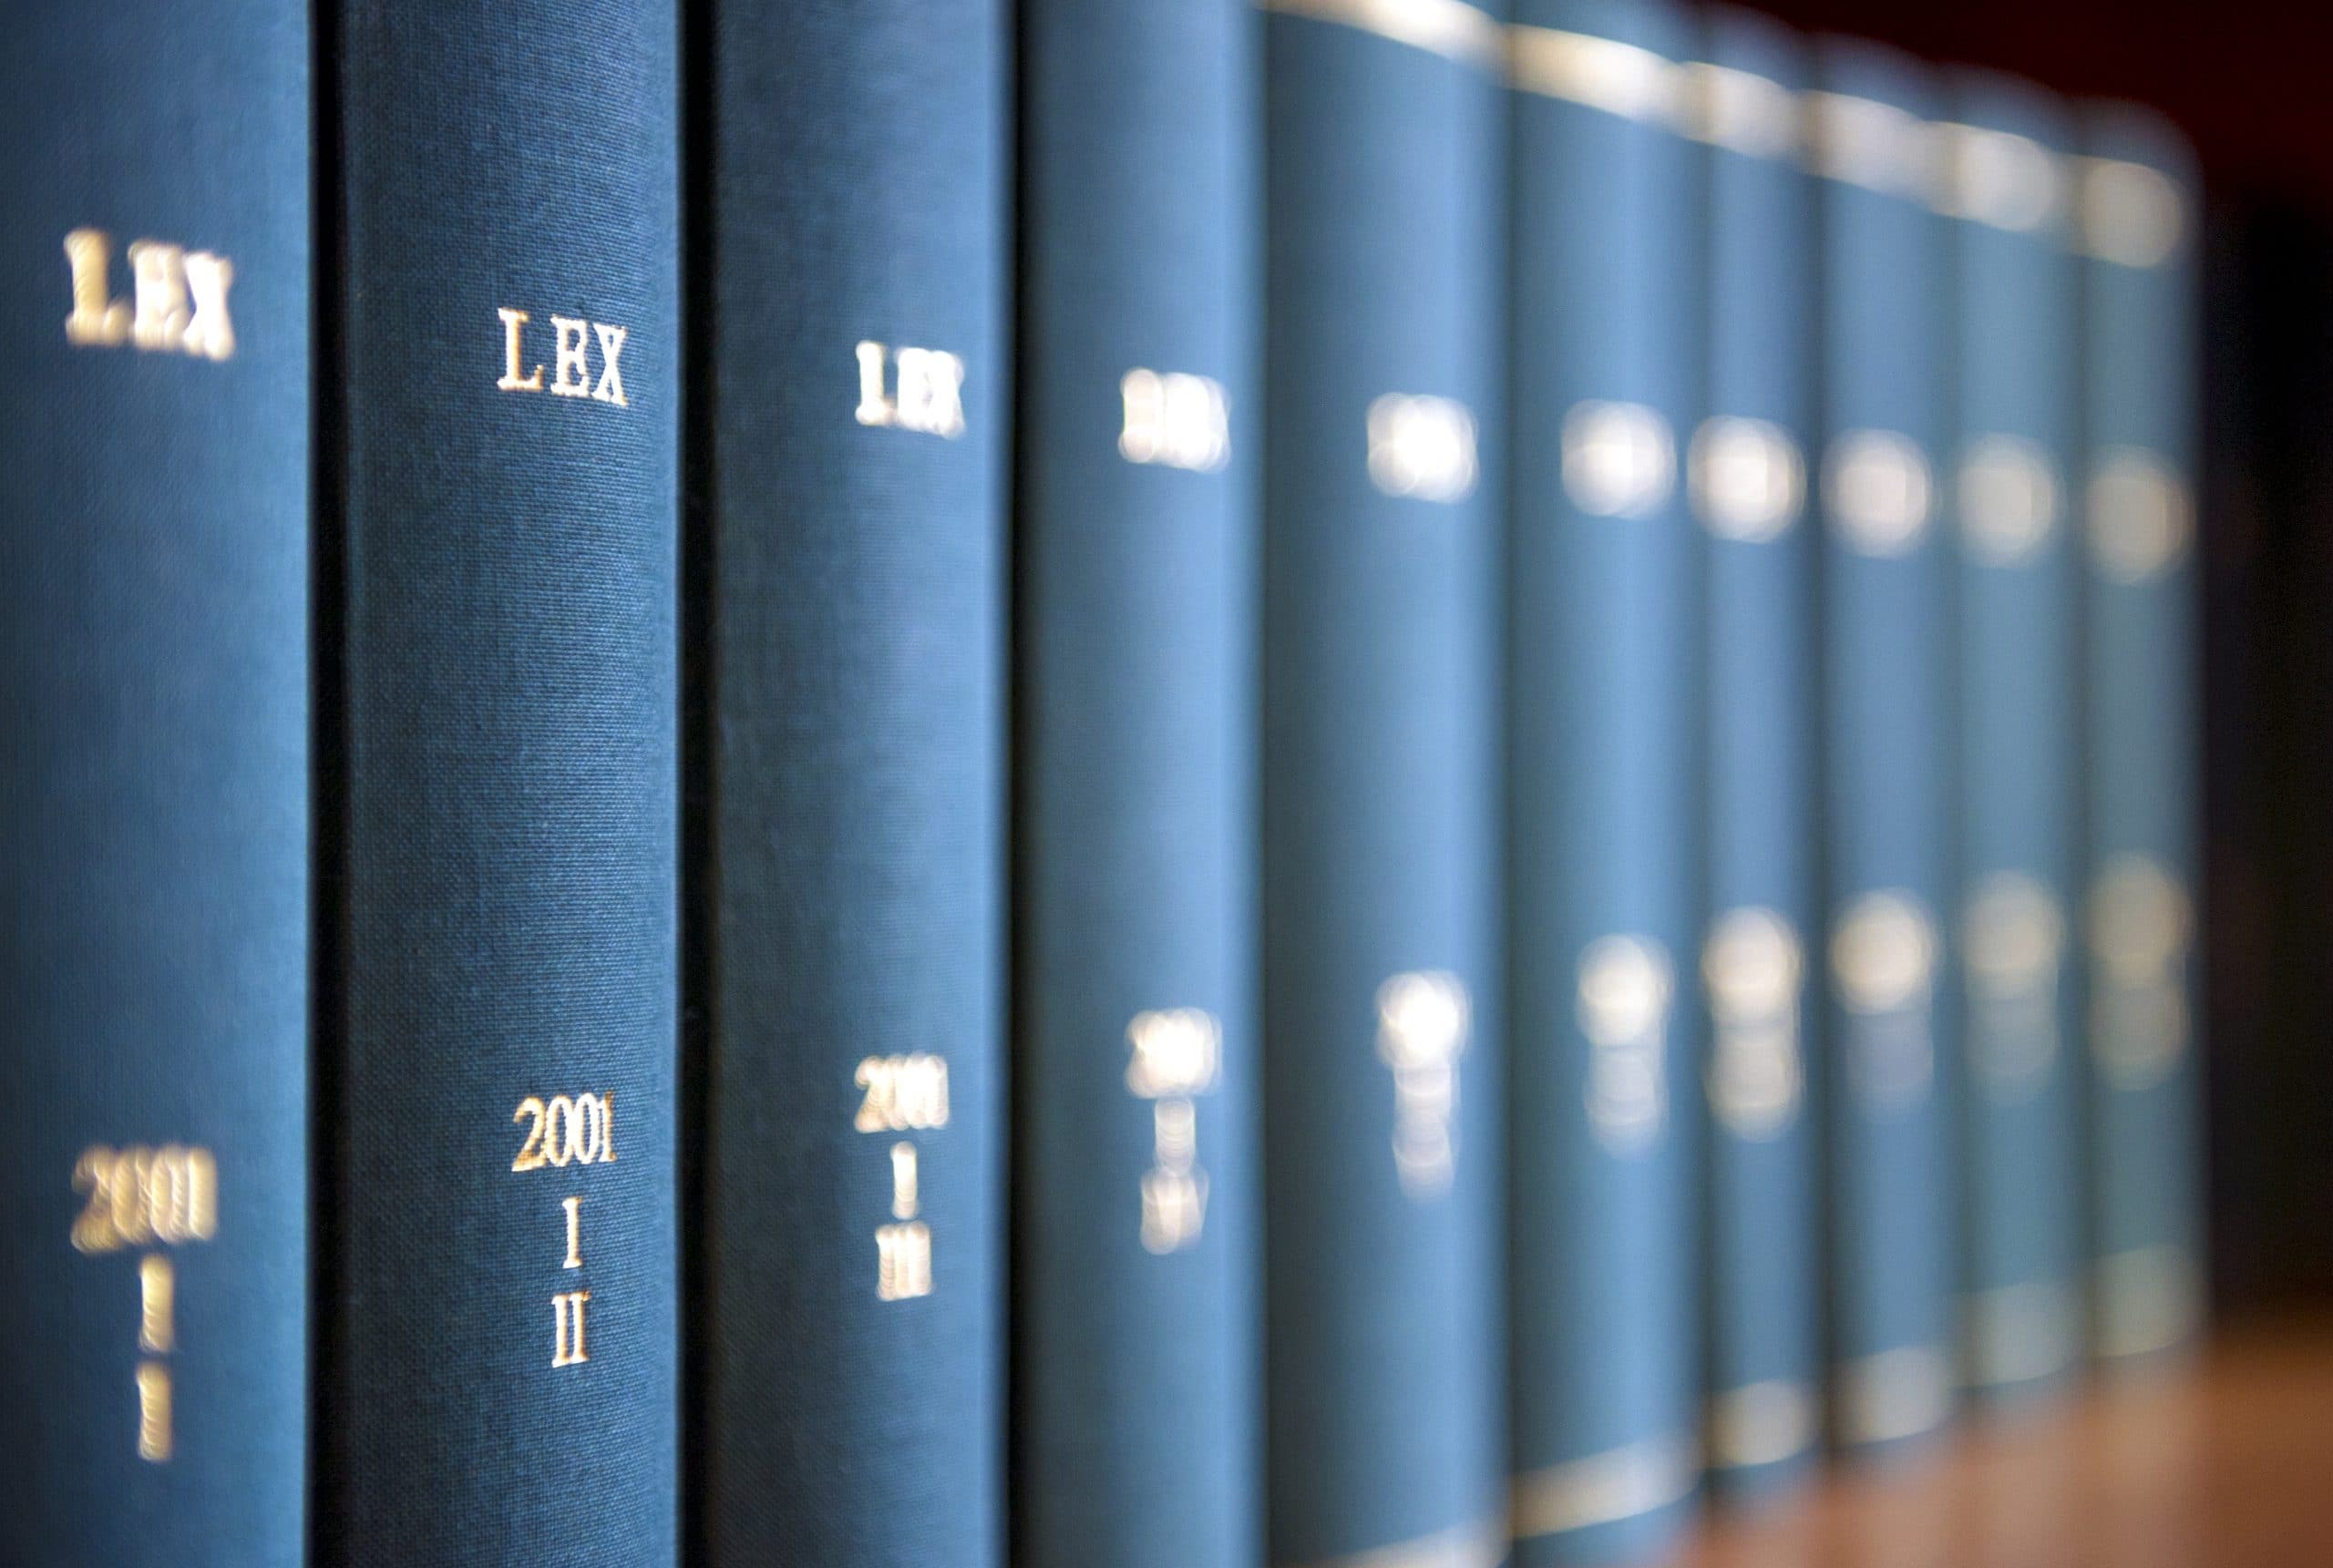 Law books on a shelf